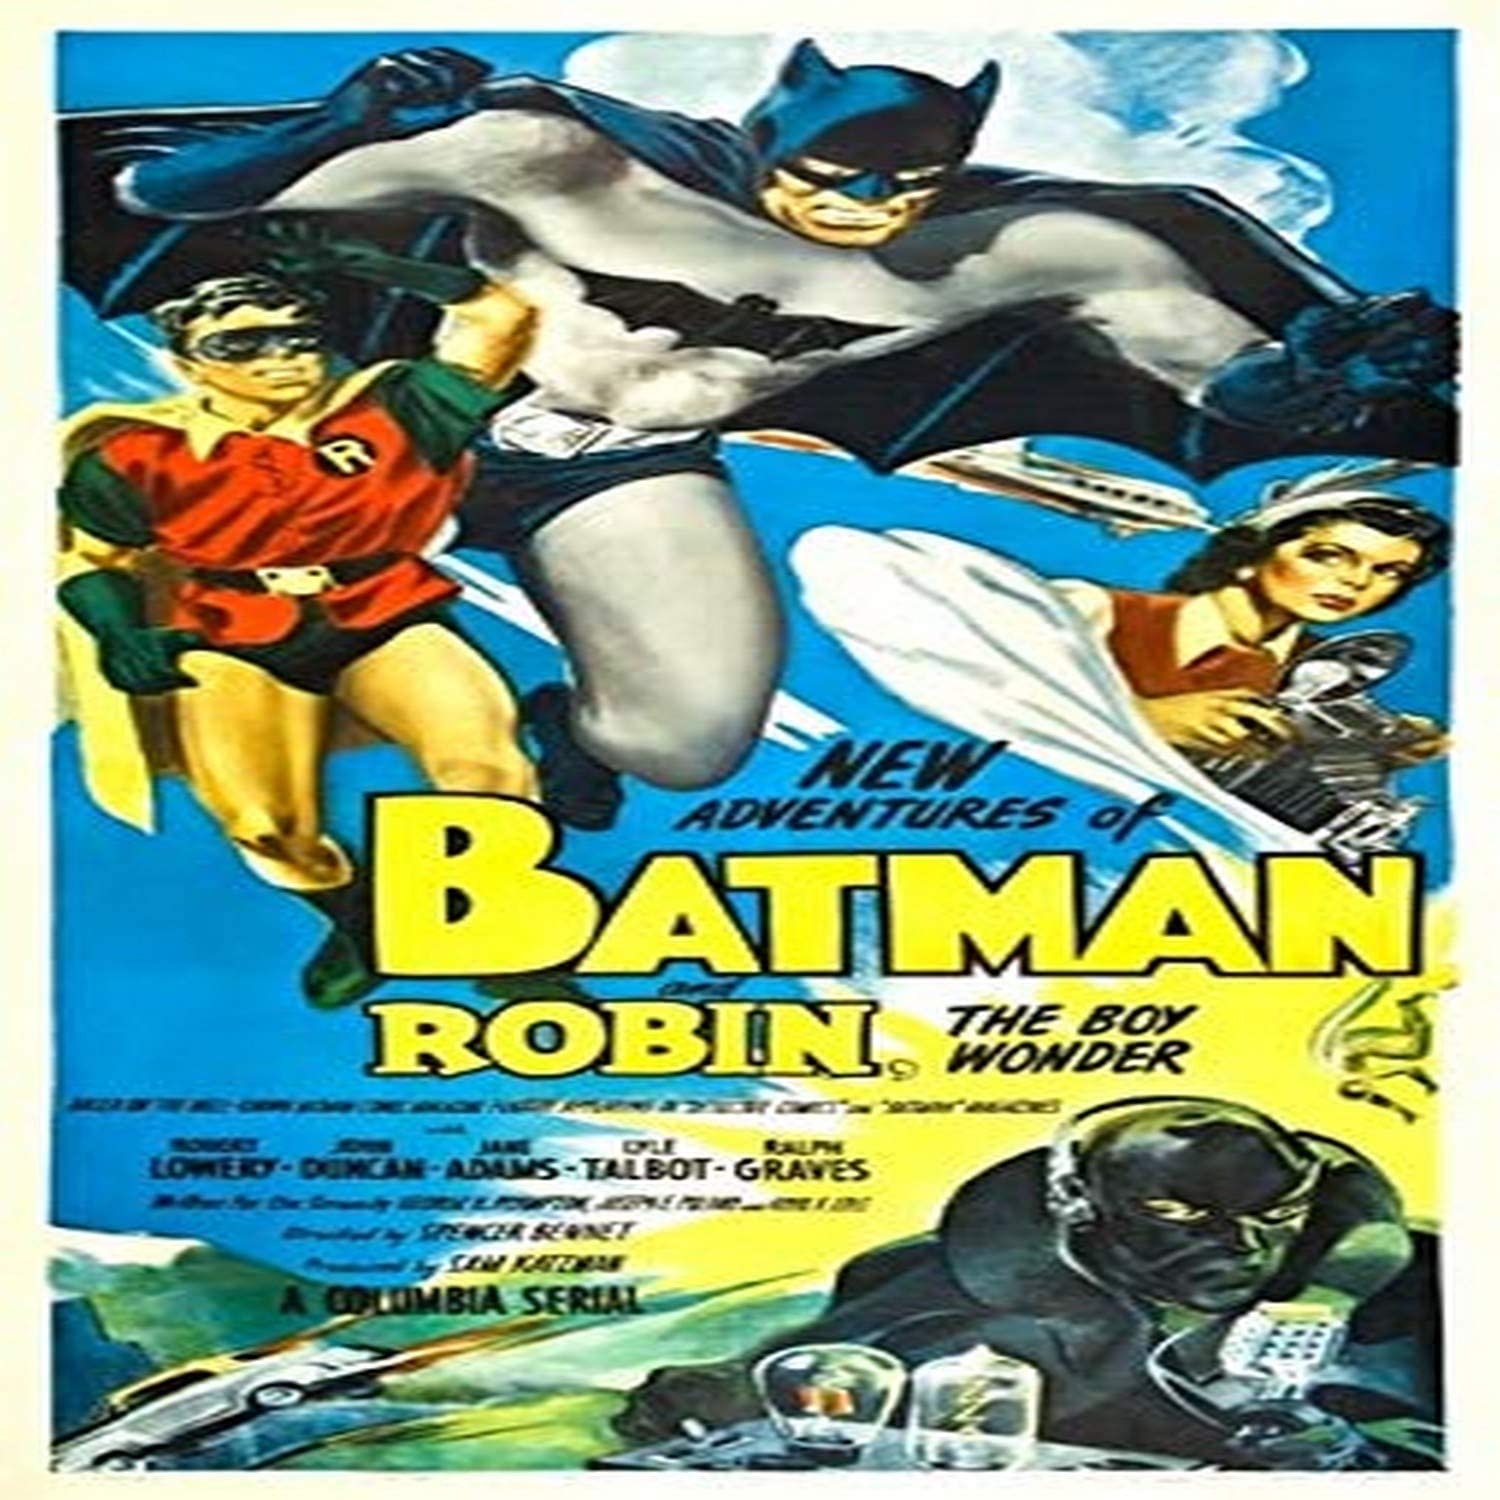 Batman and Robin (1949) movie serial starring Robert Lowery, Johnny Duncan